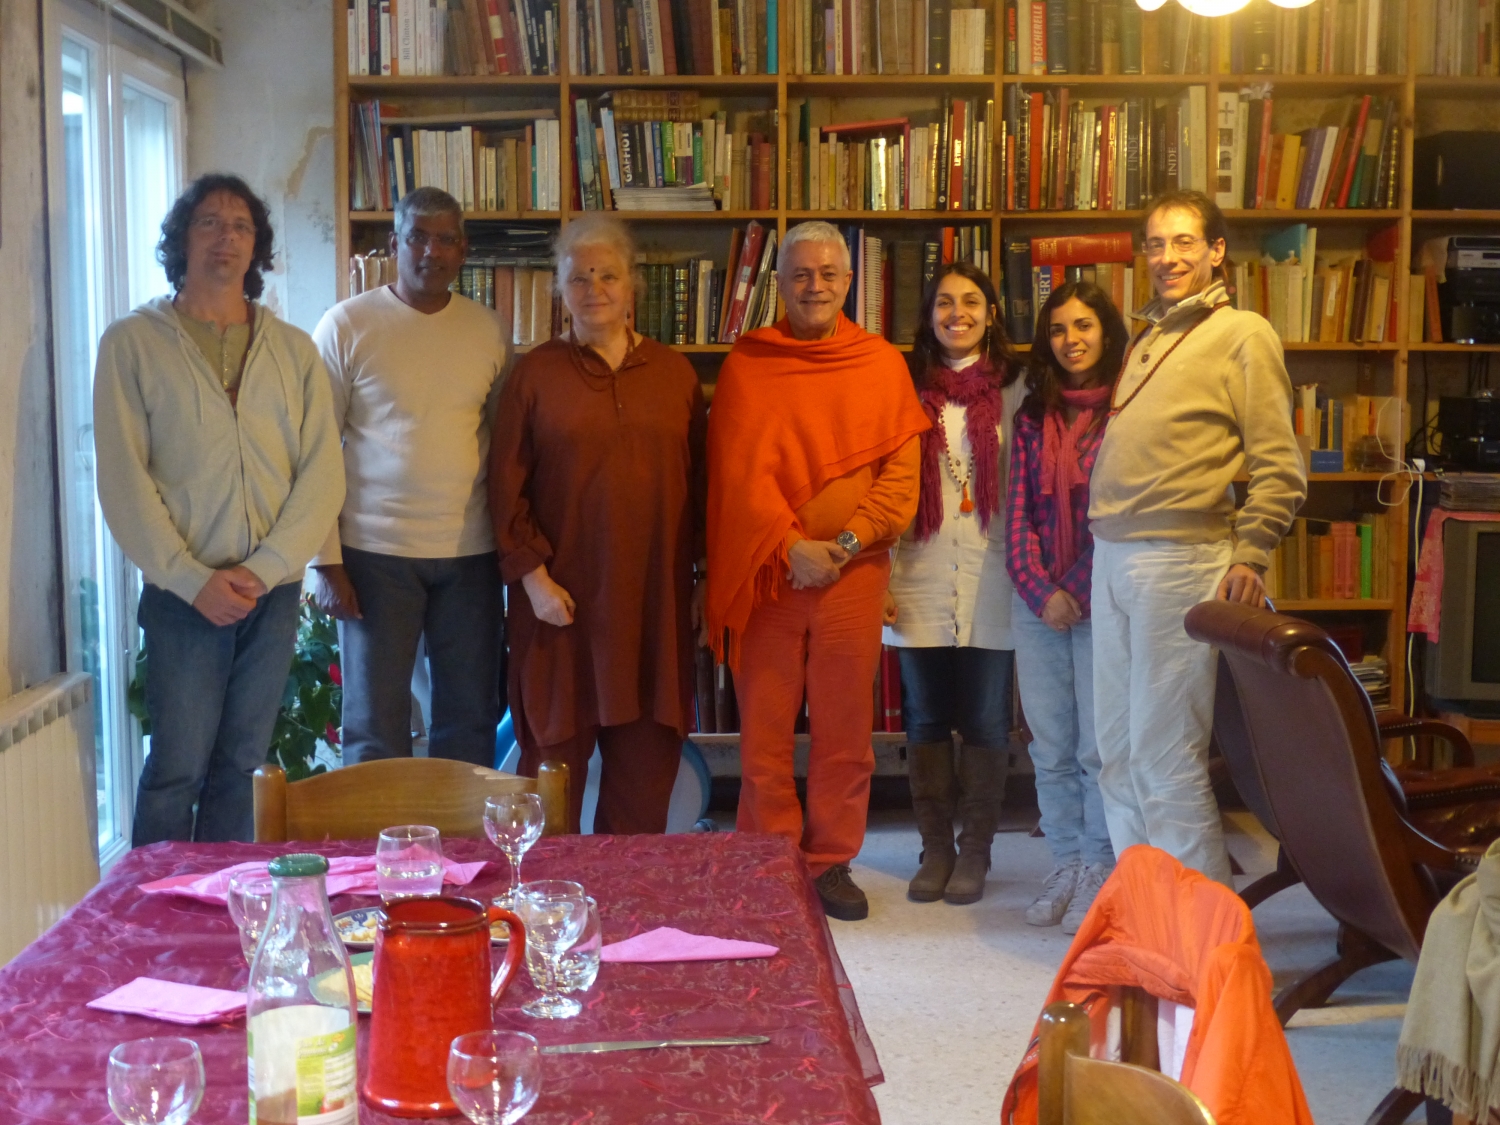 Meeting of H.H. Jagat Guru Amrta Sūryānanda Mahā Rāja with Tara Michaël - Arles, Provence - 2013, May